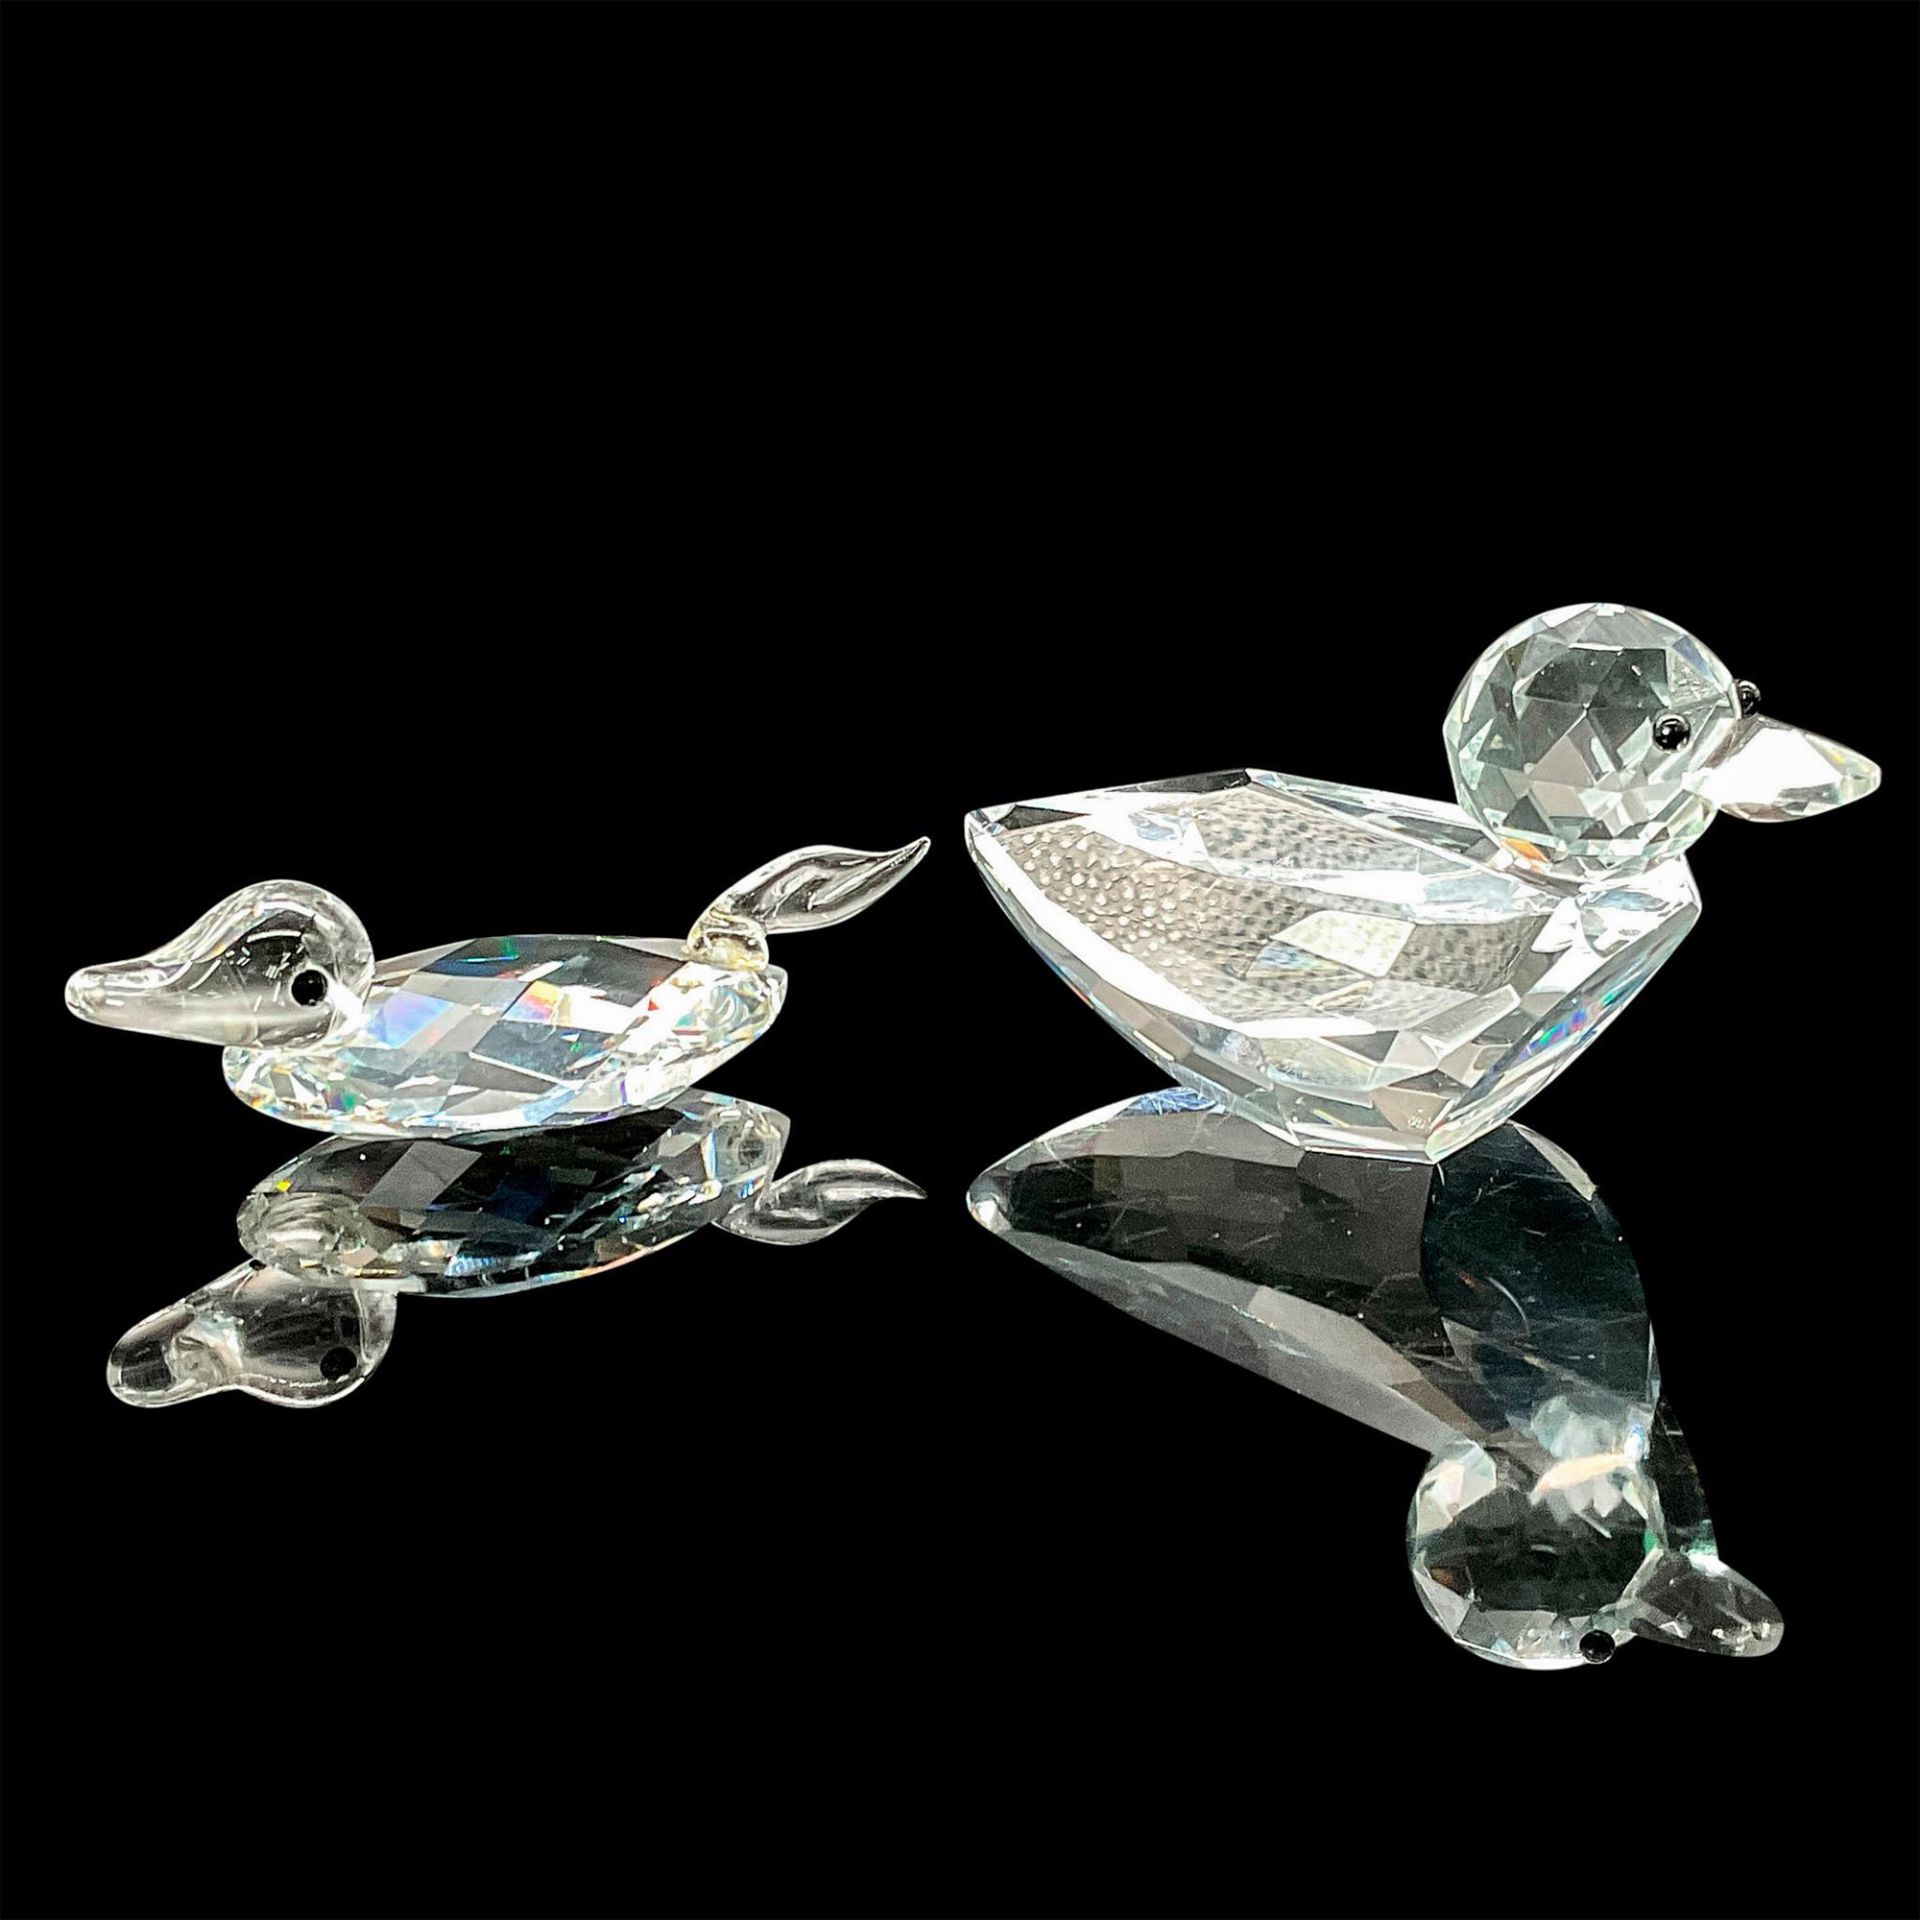 Pair of Crystal Figurines, Ducks - Image 2 of 3